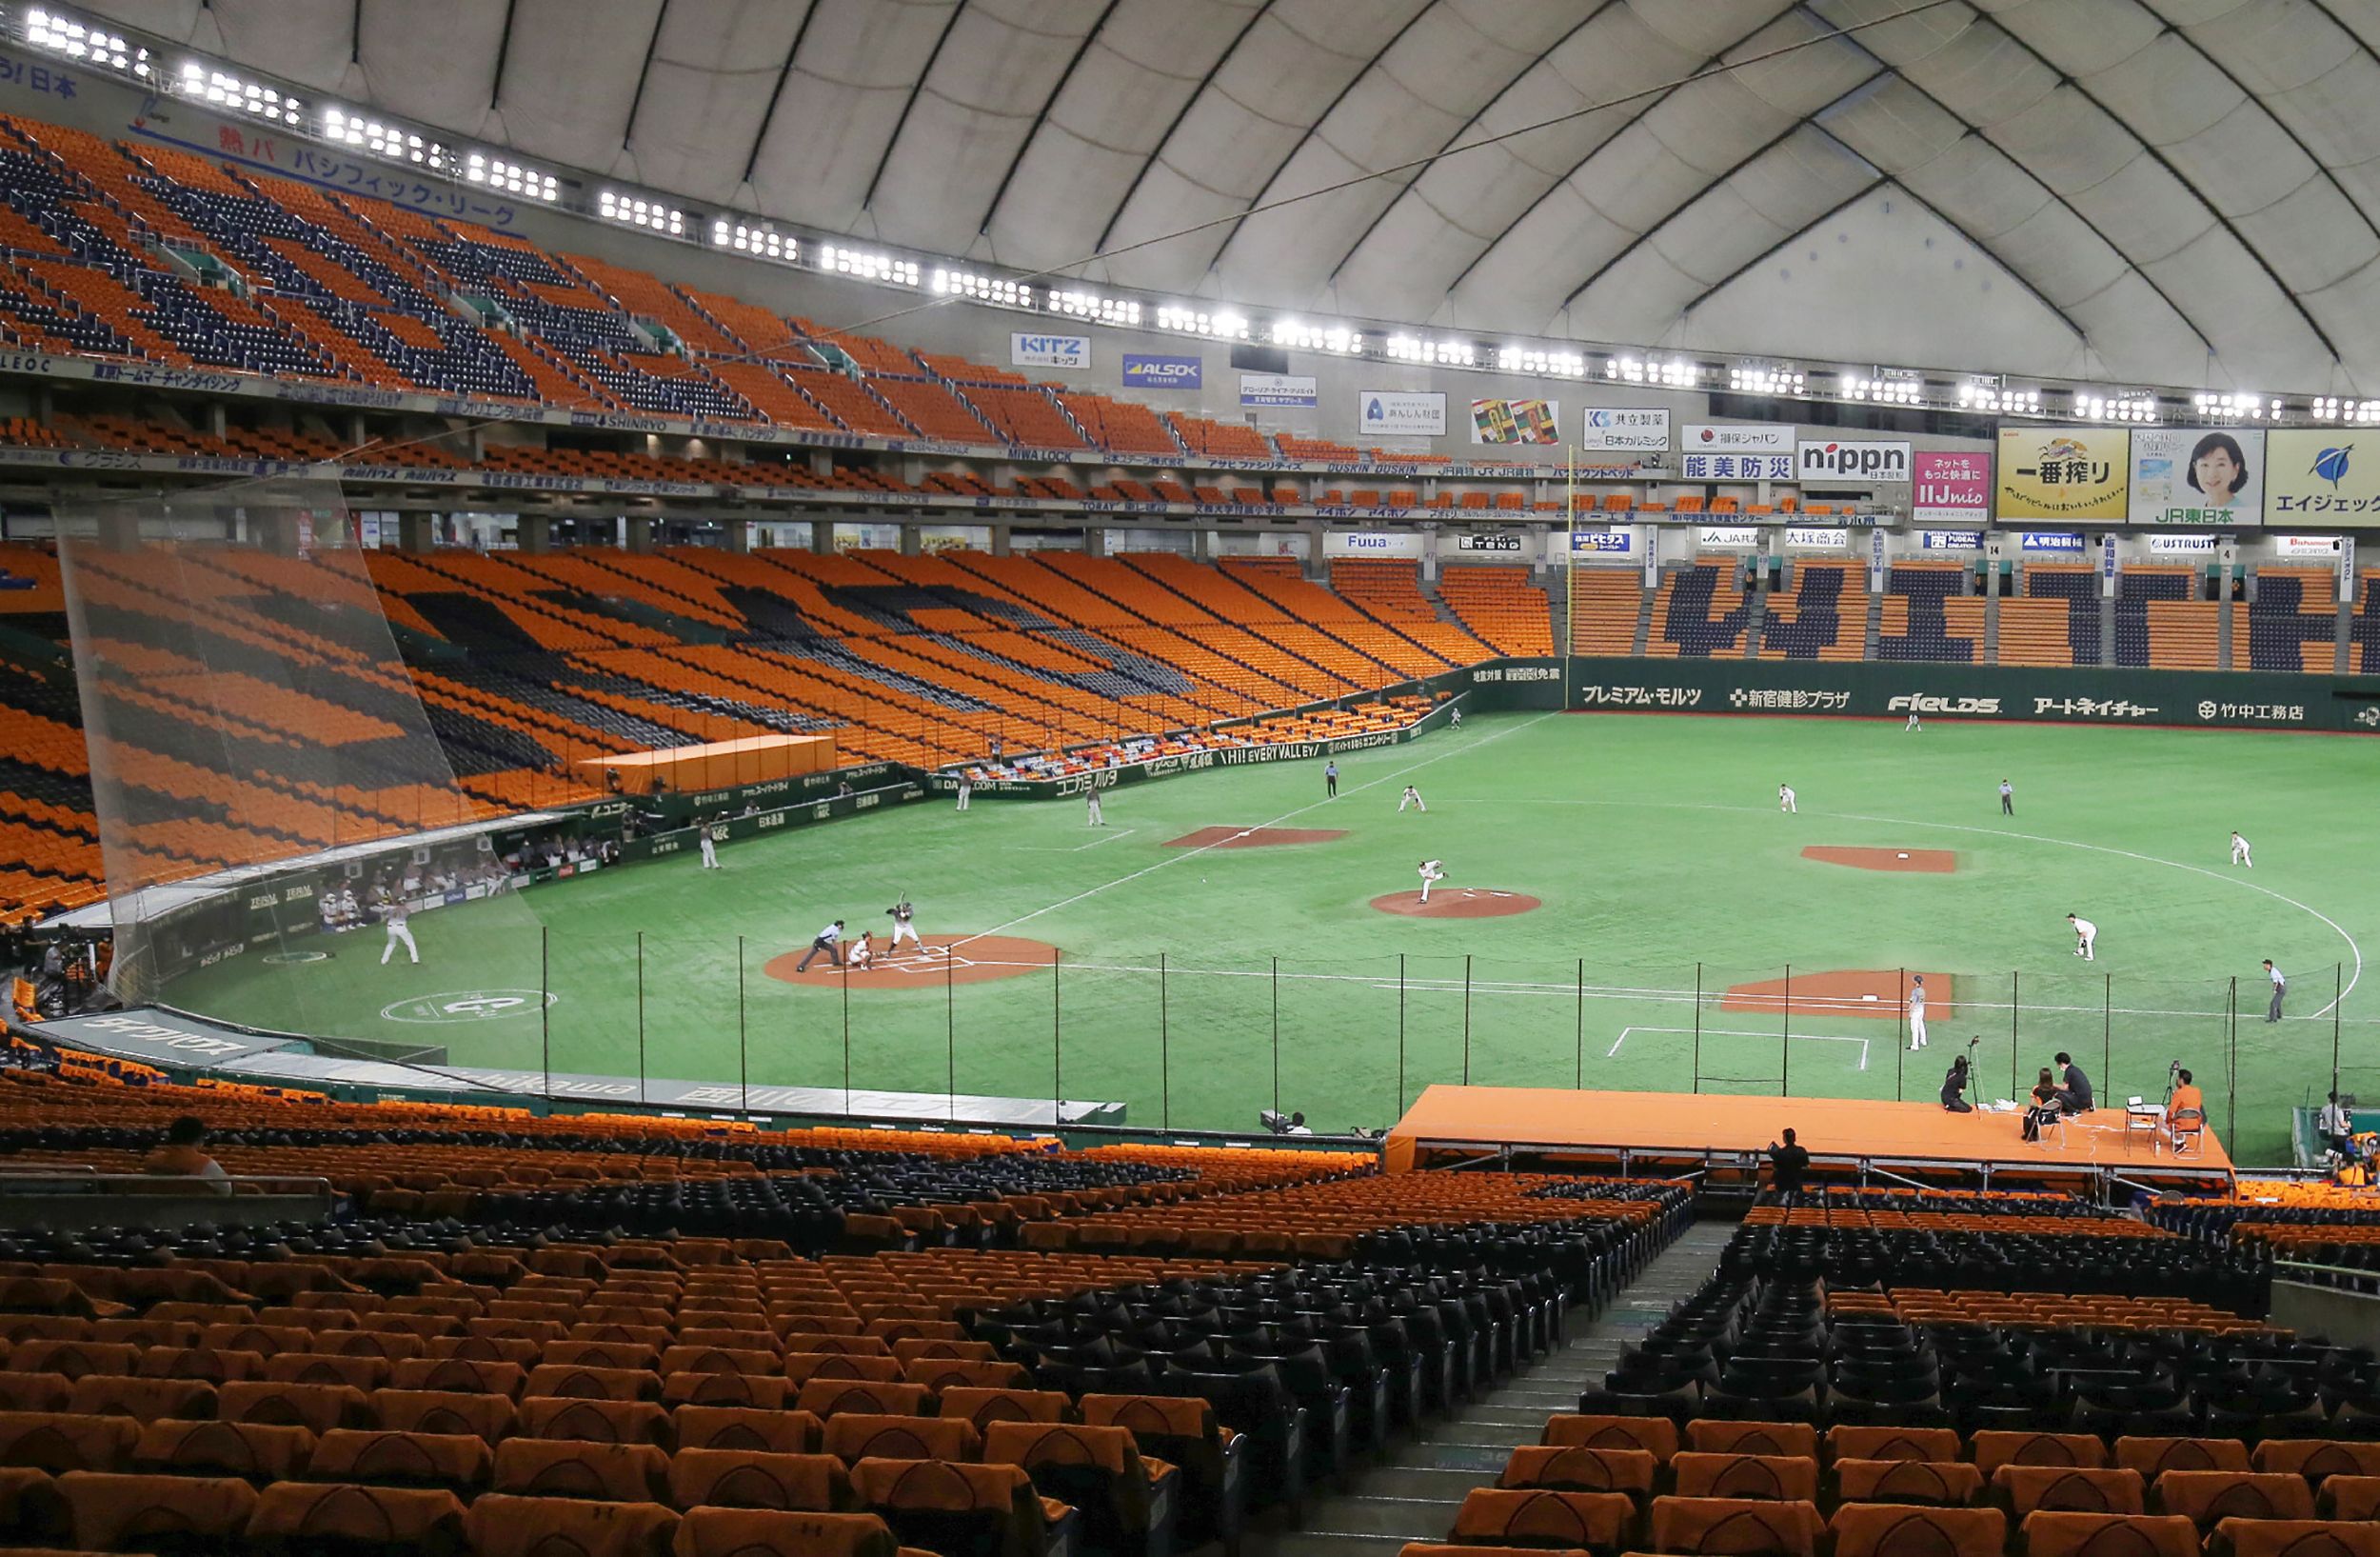 Supporter of Yomiuri Giants baseball team at Tokyo Dome stadium